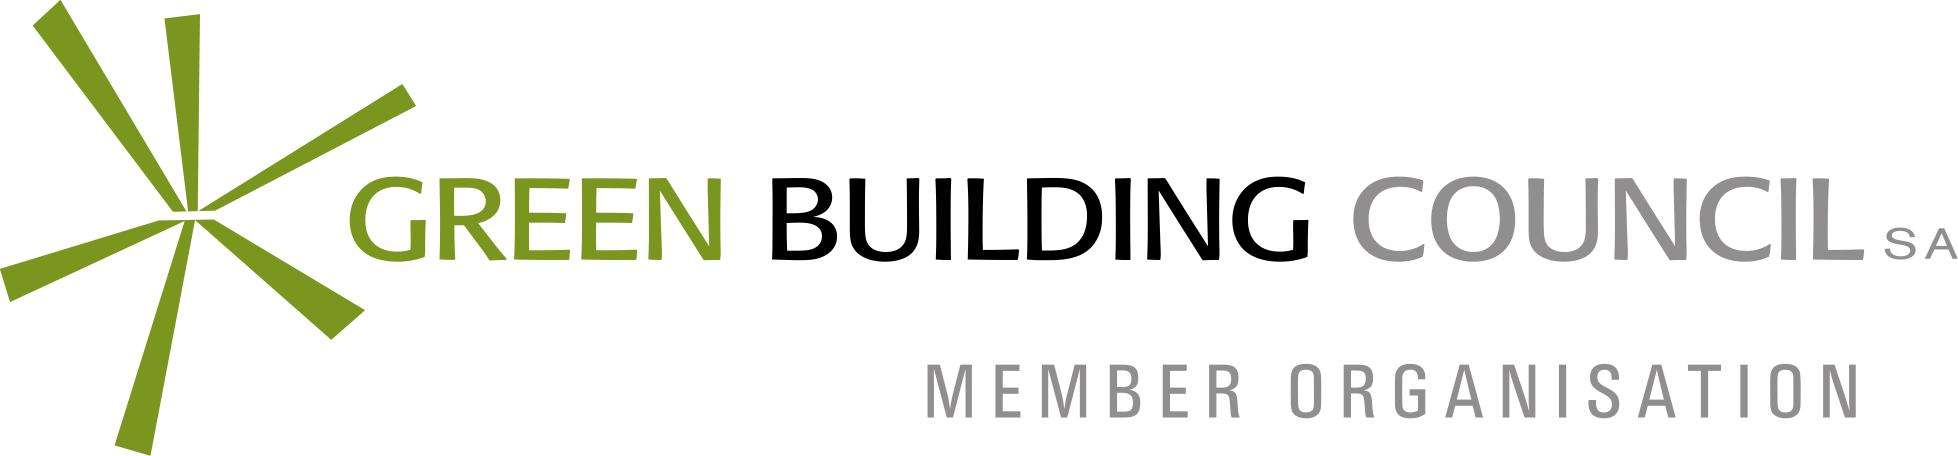 gbc member organisation